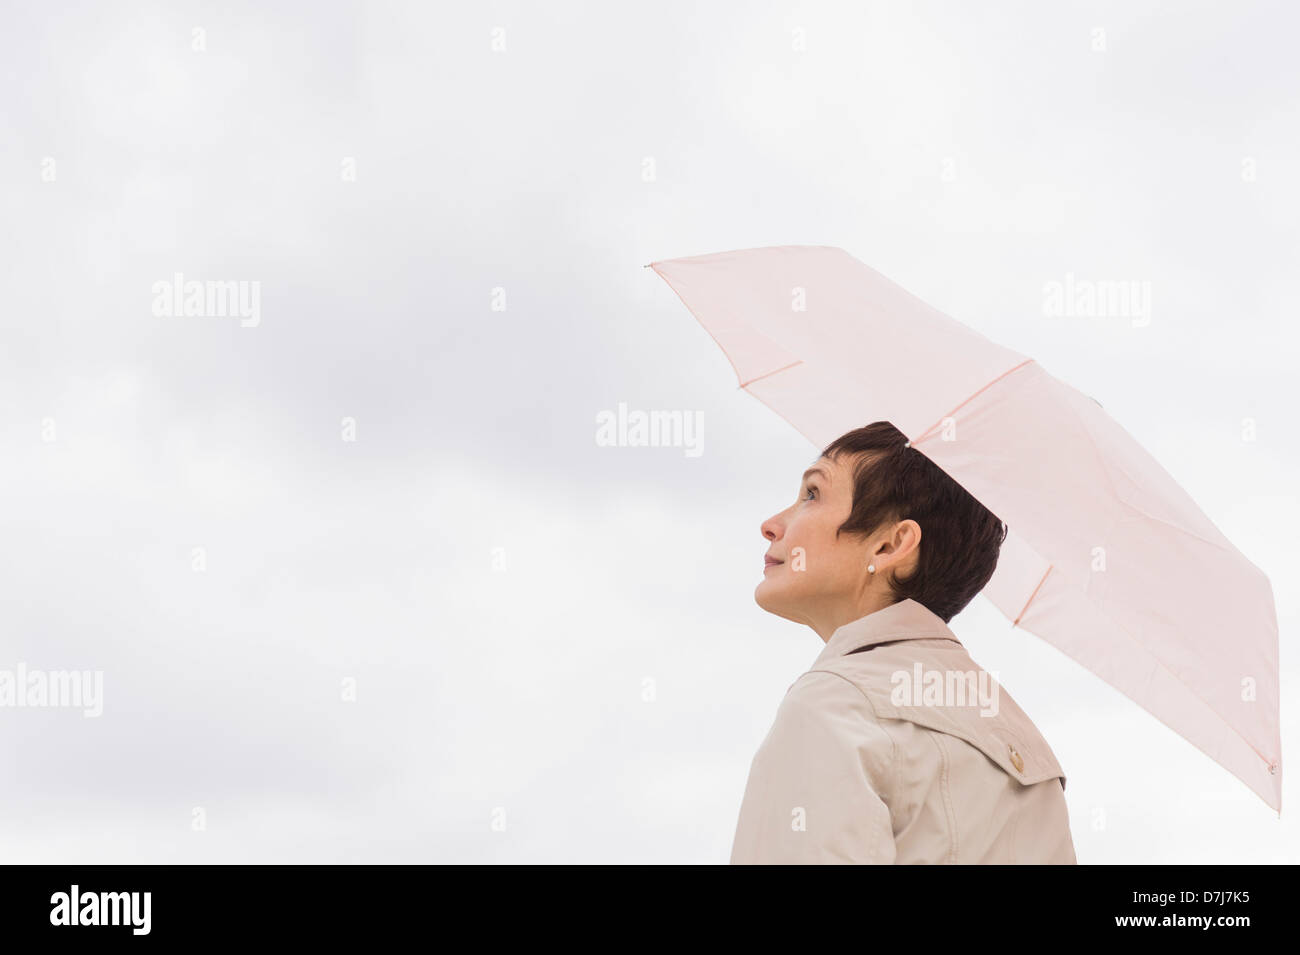 Woman wearing raincoat and holding umbrella Stock Photo